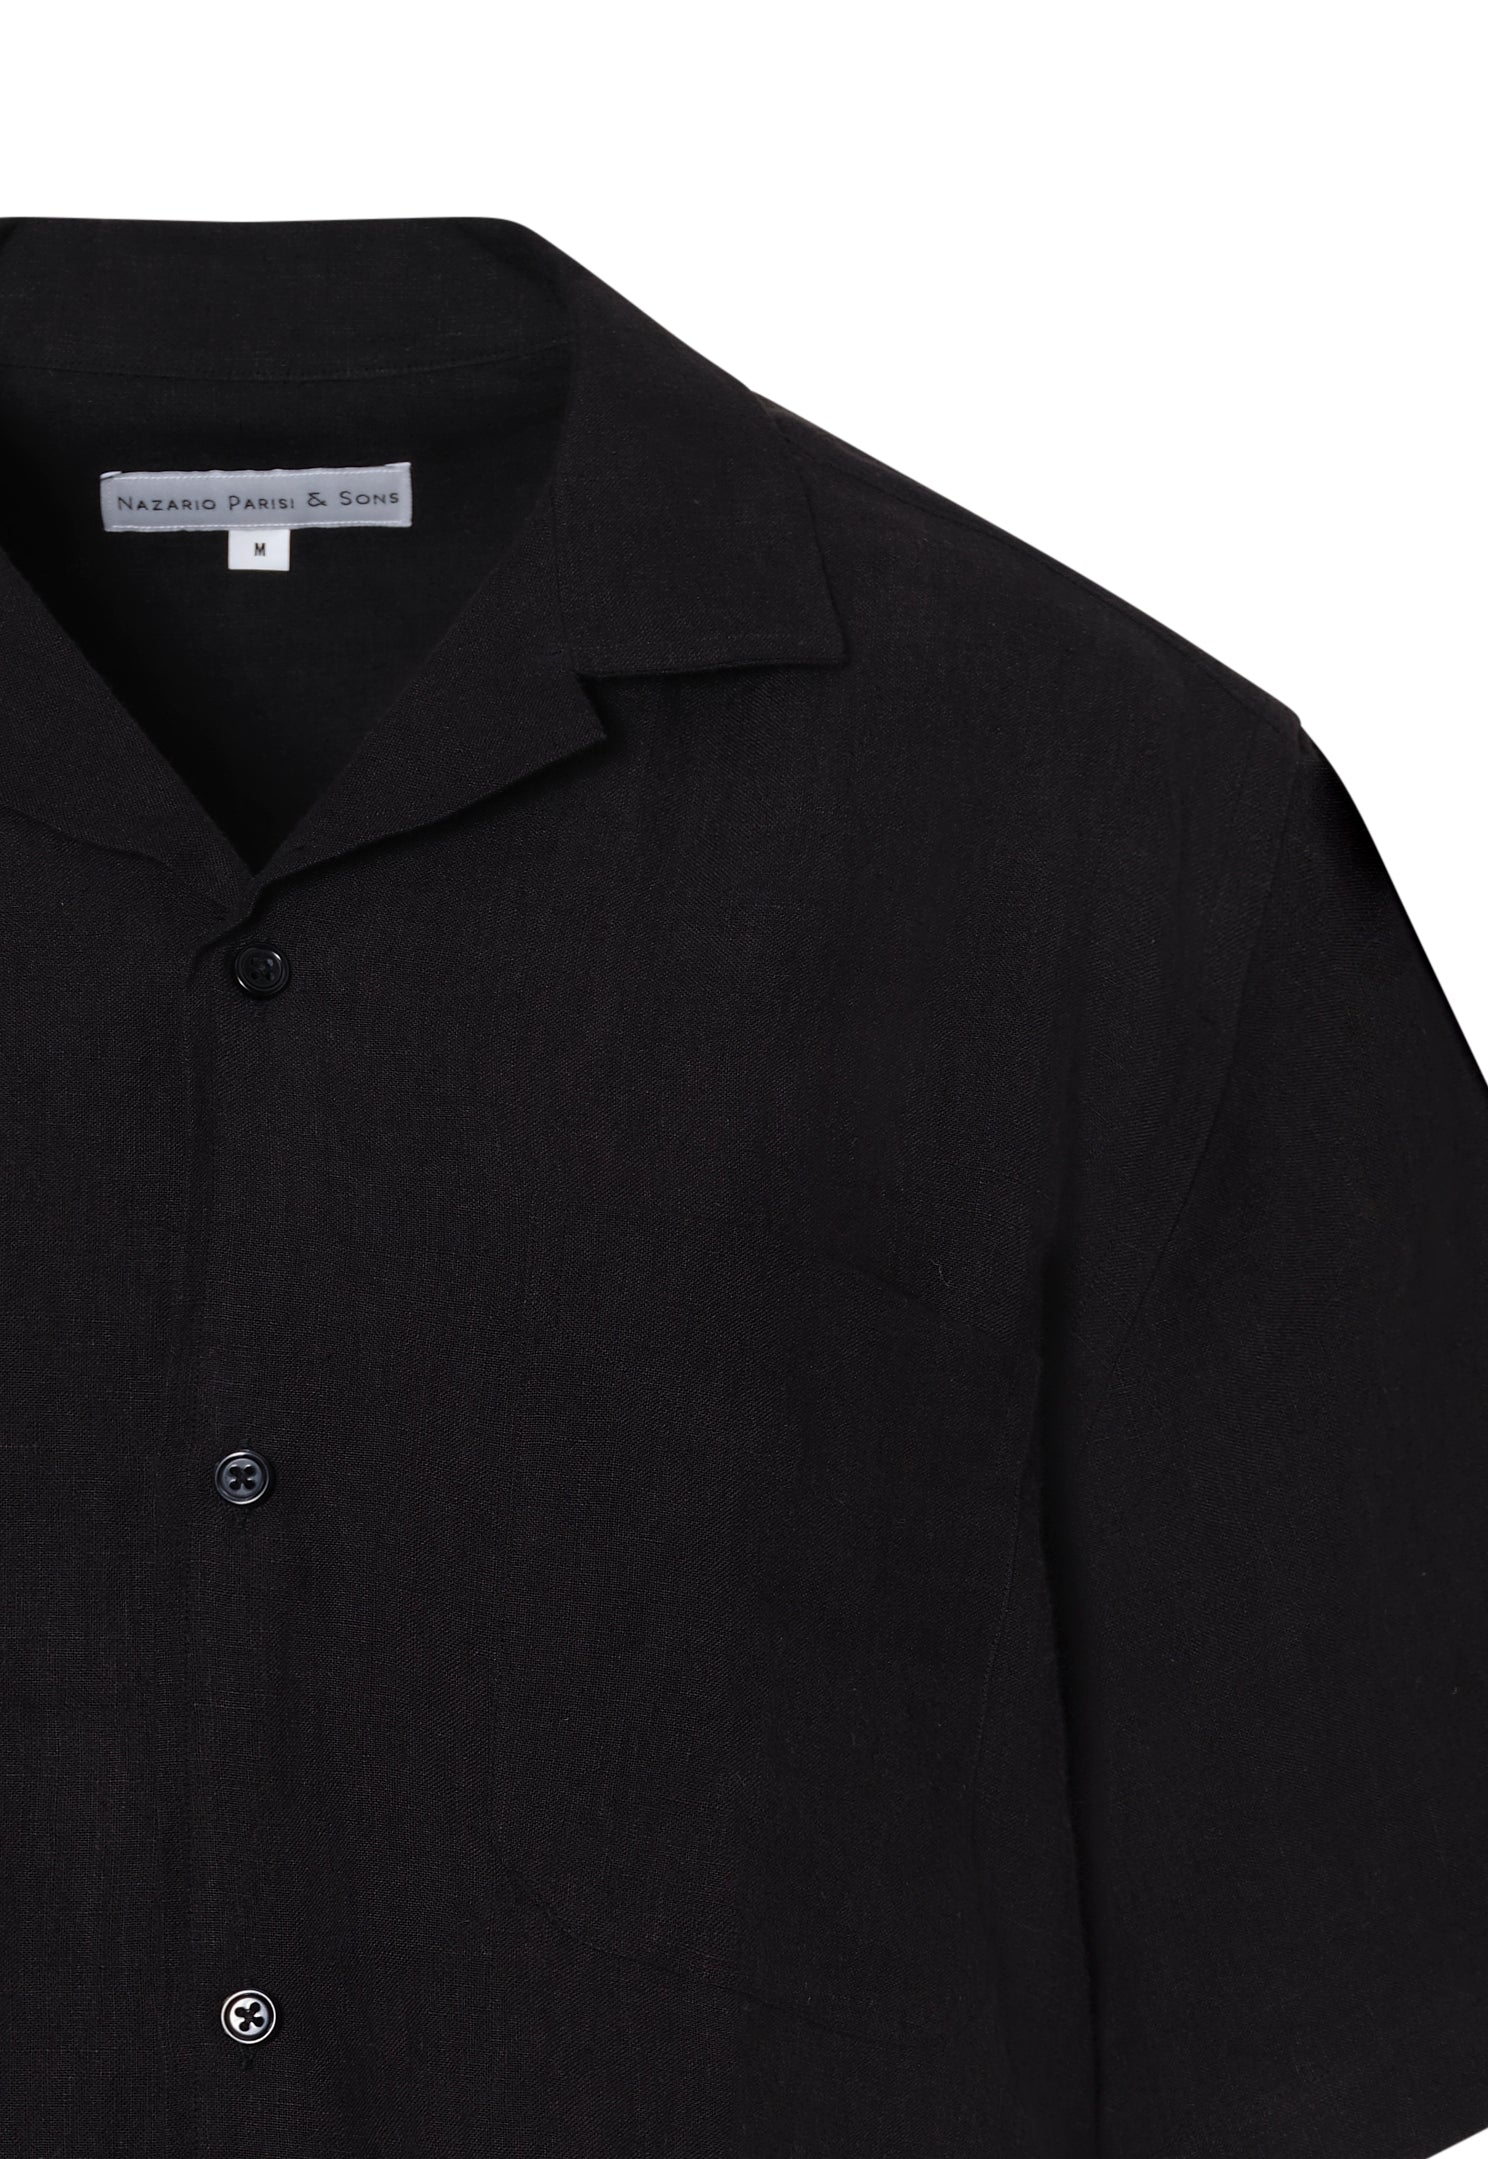 Formentera Black Short Sleeve Shirt